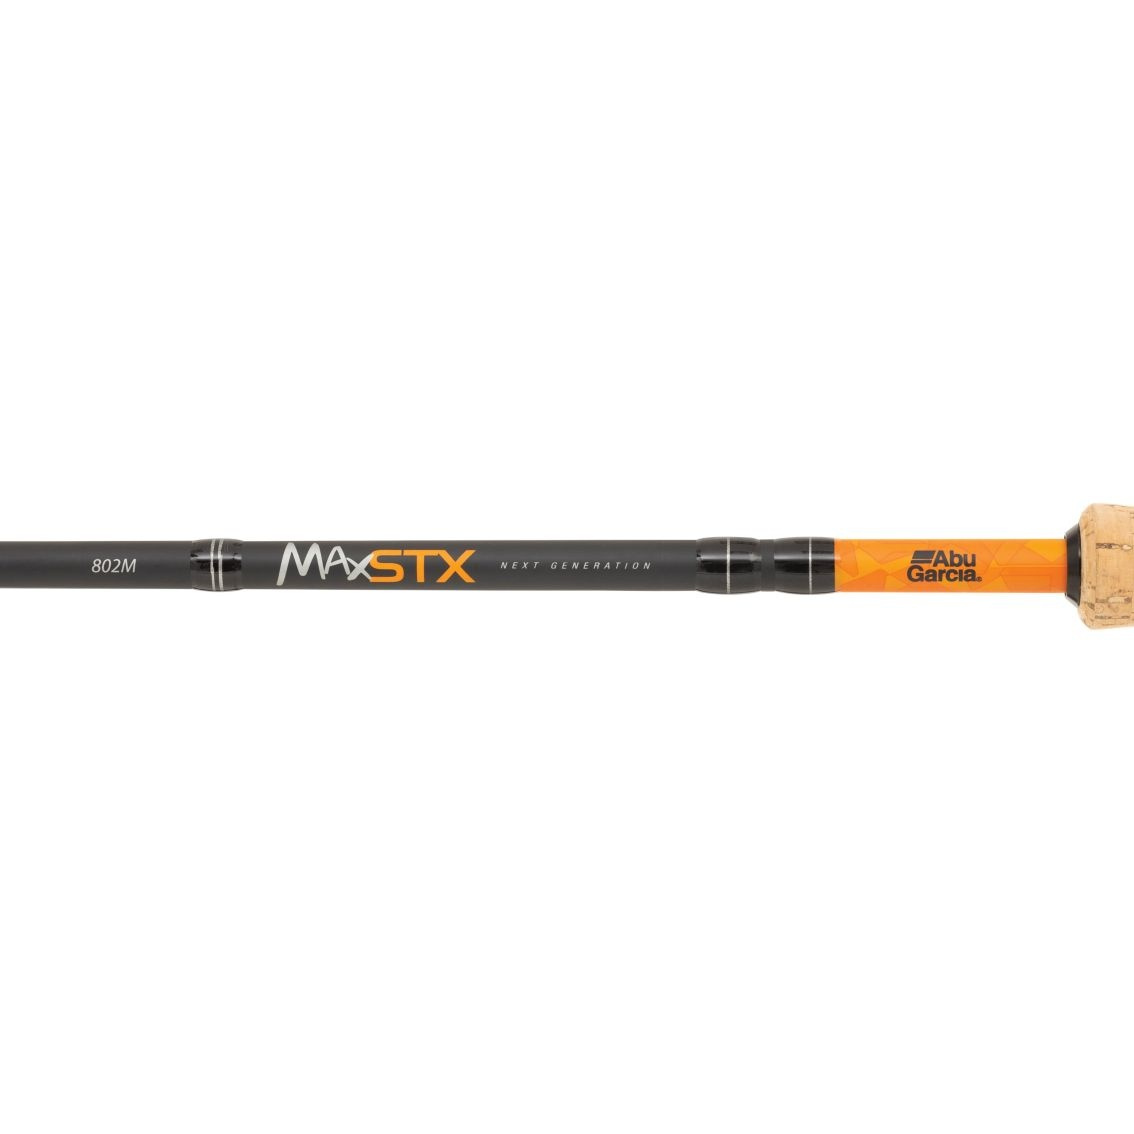 Abu Garcia Max STX Combo 6\' UL 2-10g